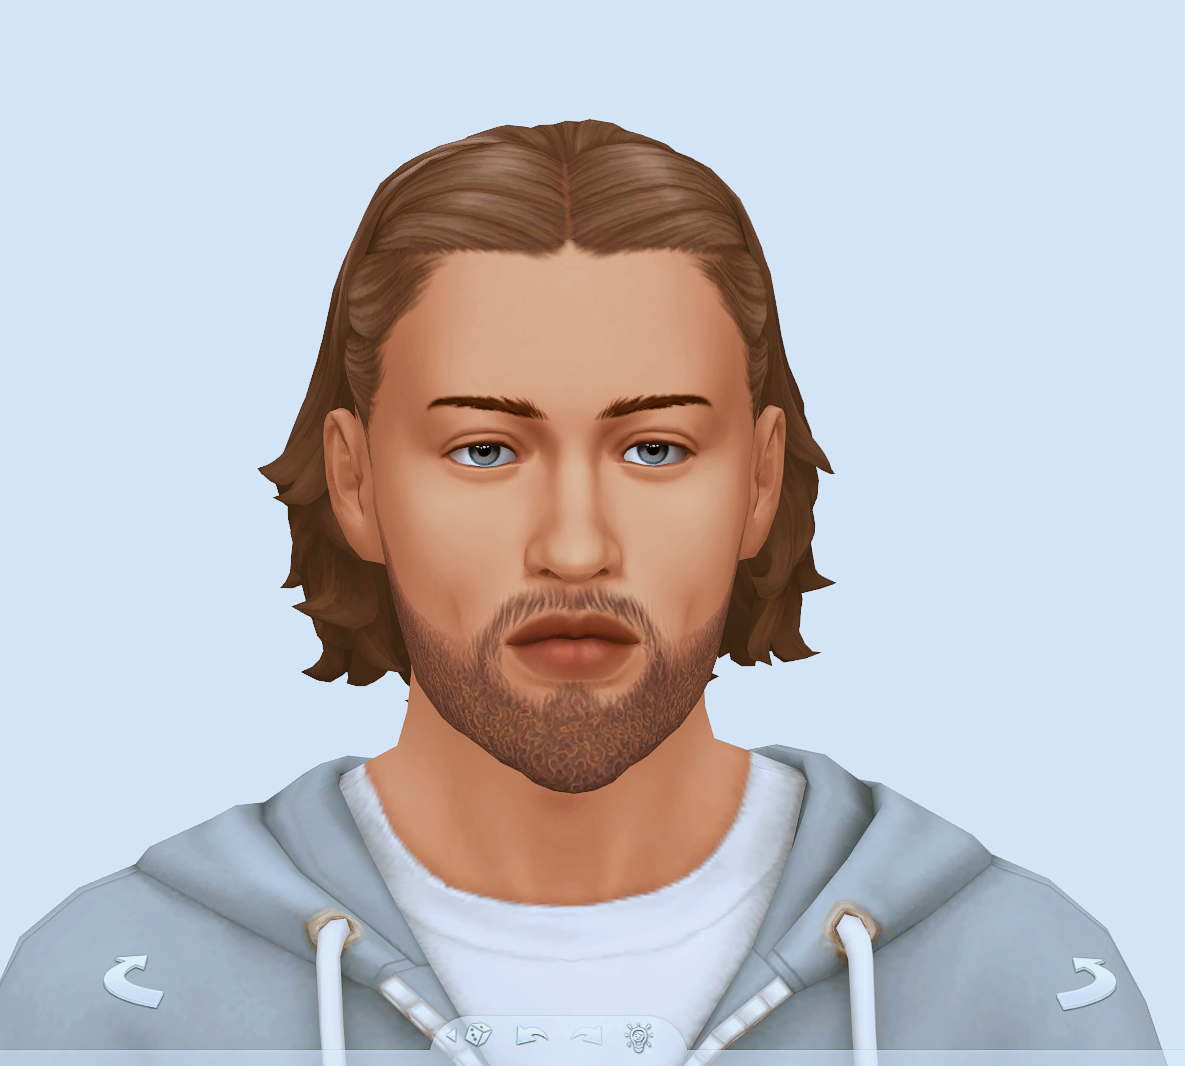 Male Dump Minimal Cc Screenshots The Sims 4 Sims Households Curseforge 